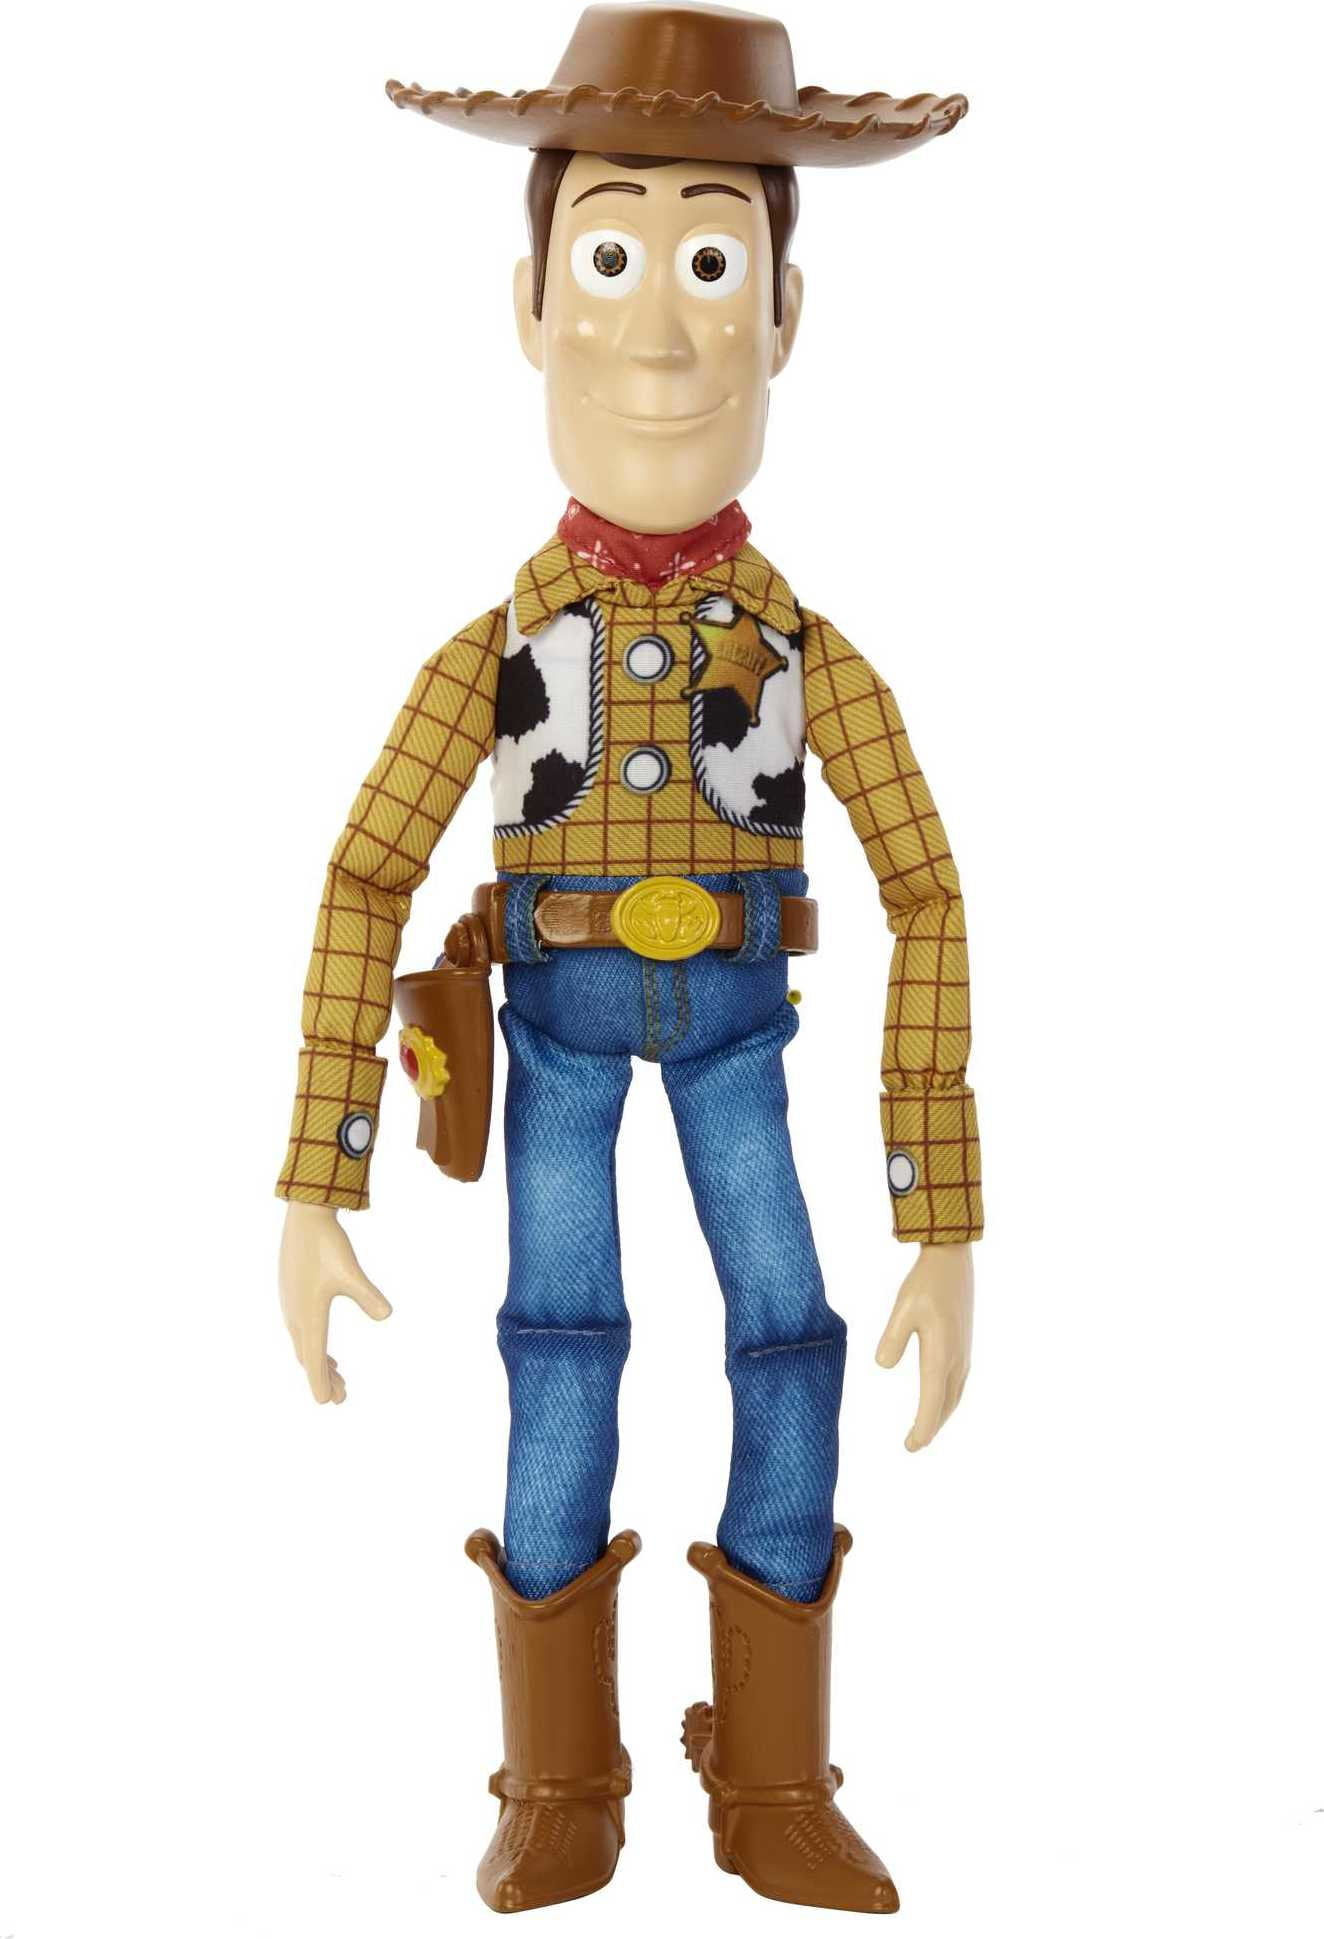 2019 Barbie Fashion Disney Pixar Toy Story 4 clothing tops pair Woody Buzz 